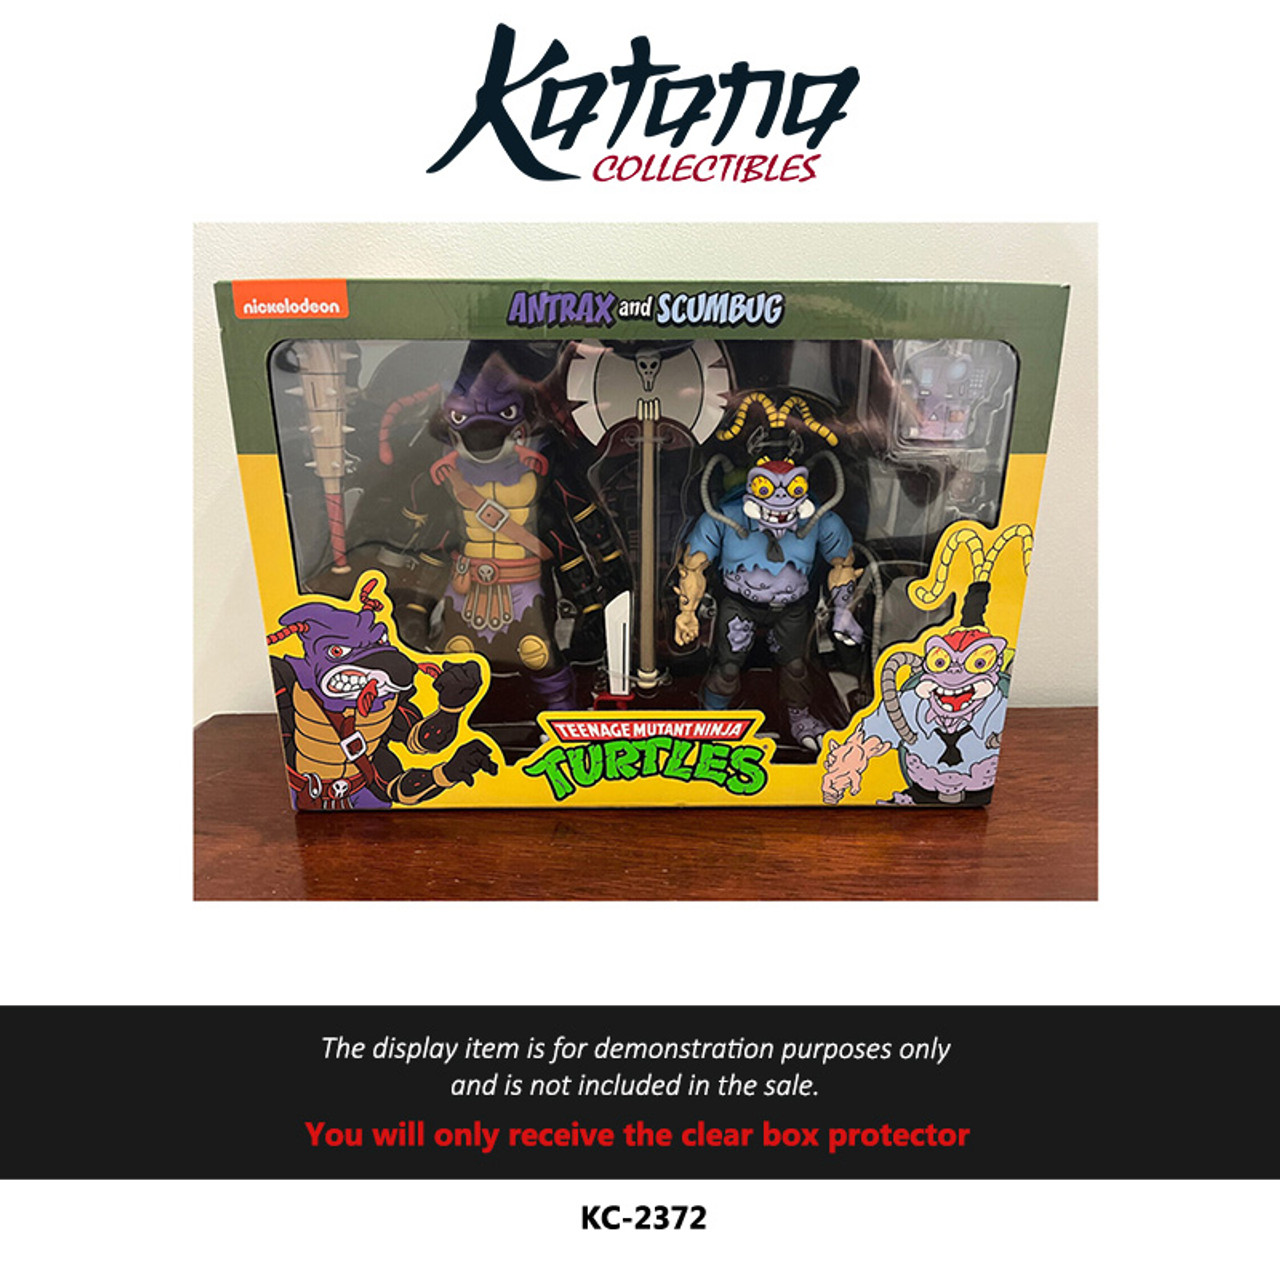 Katana Collectibles Protector For Teenage Mutant Ninja Turtles 2-Pack Antrax & Scumbug Figures